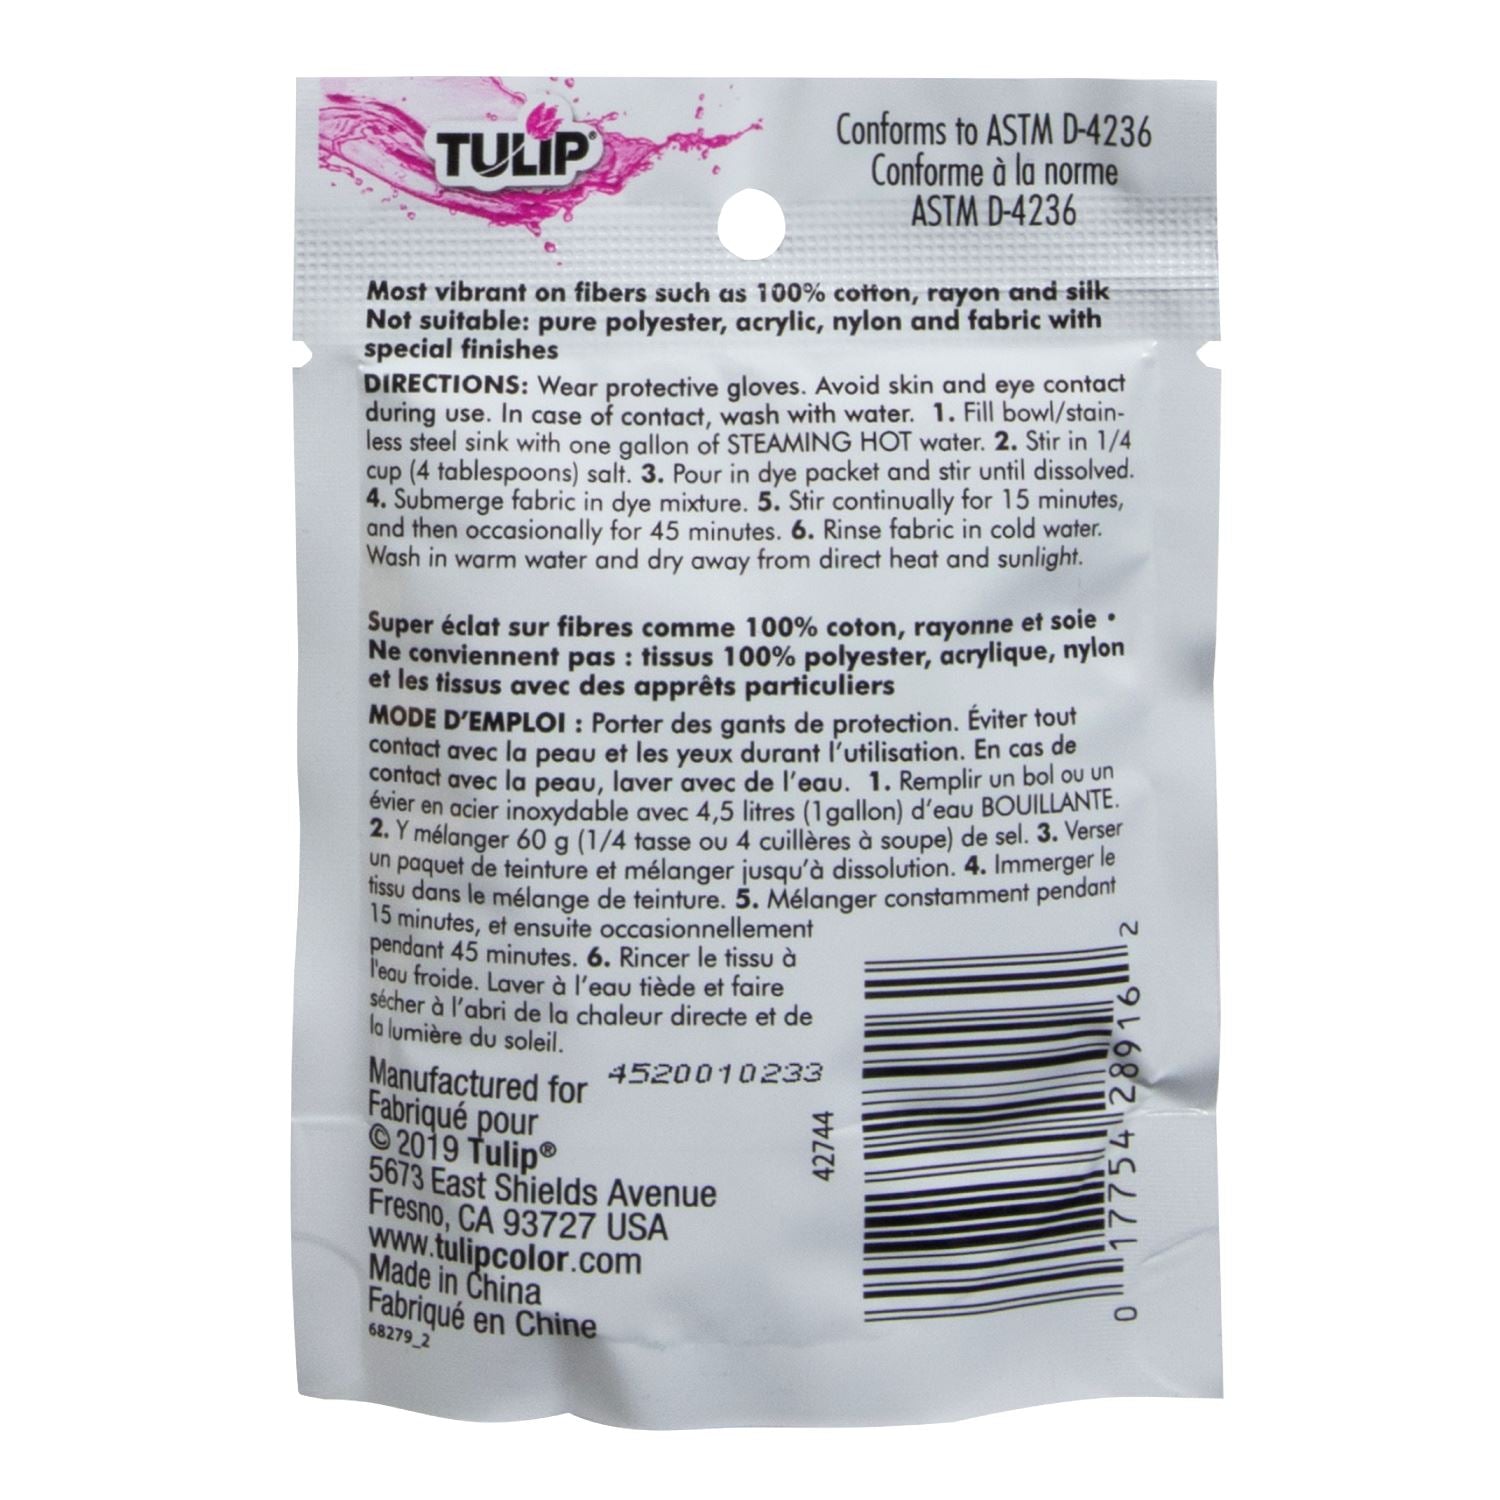 Tulip Permanent Fabric Dye 1.76oz Hot Bright Pink